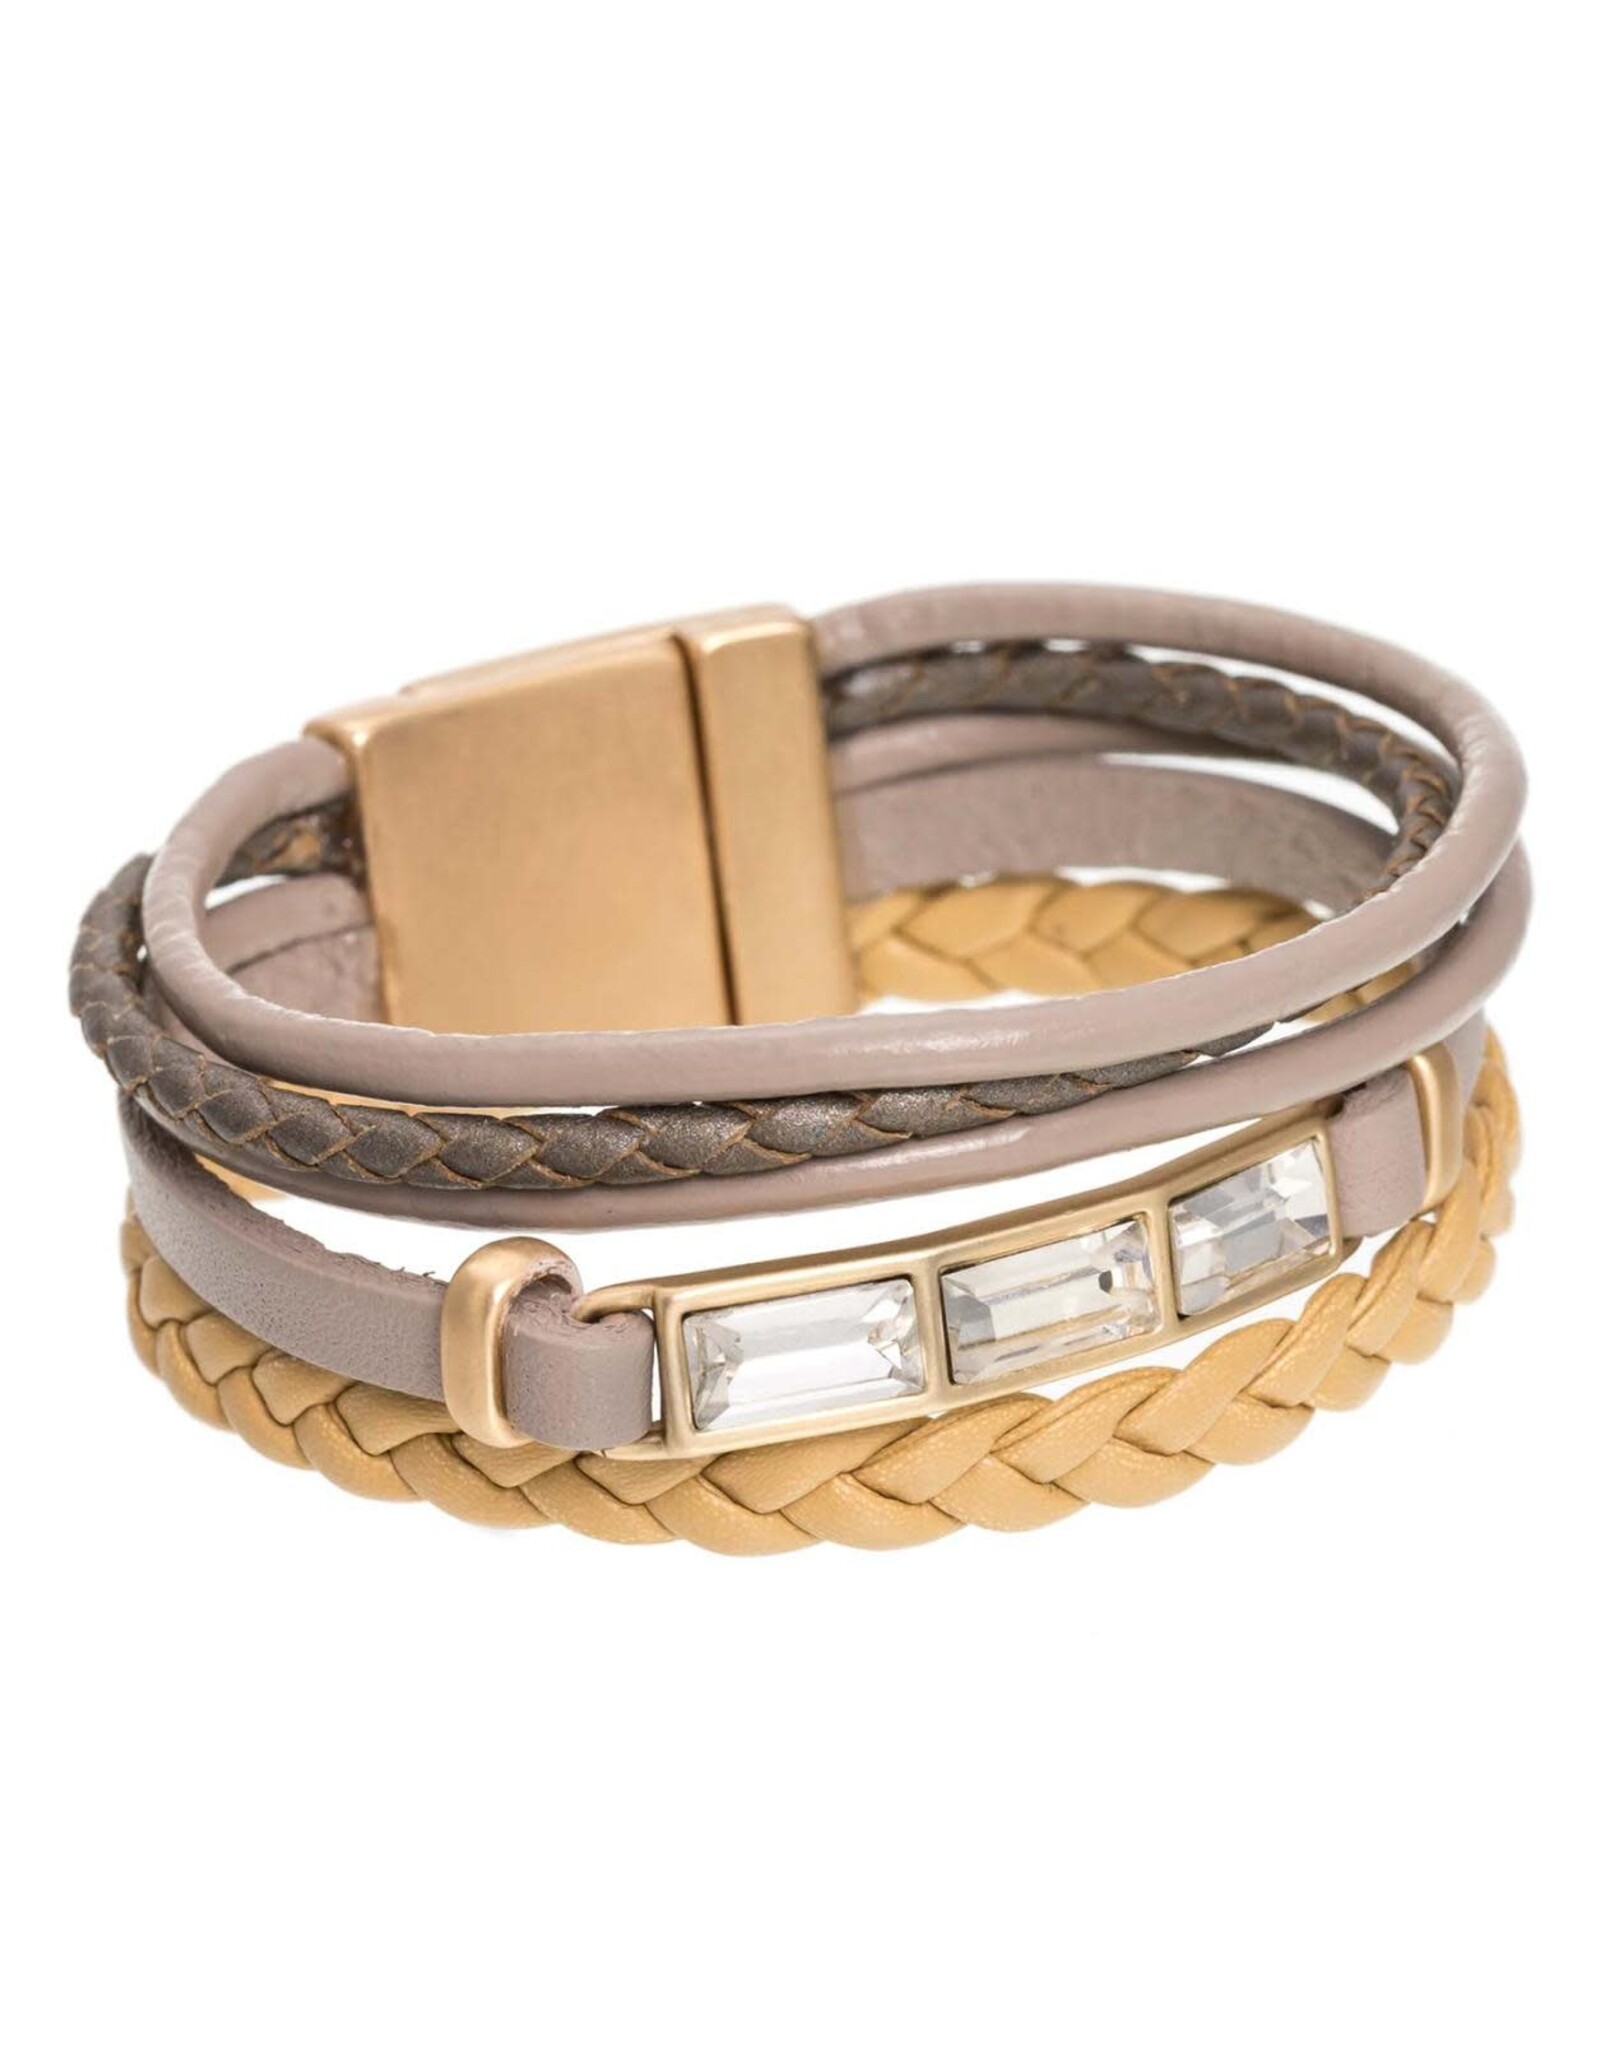 Merx Inc. Fashion Bracelet + Taupe + New Matt Gold